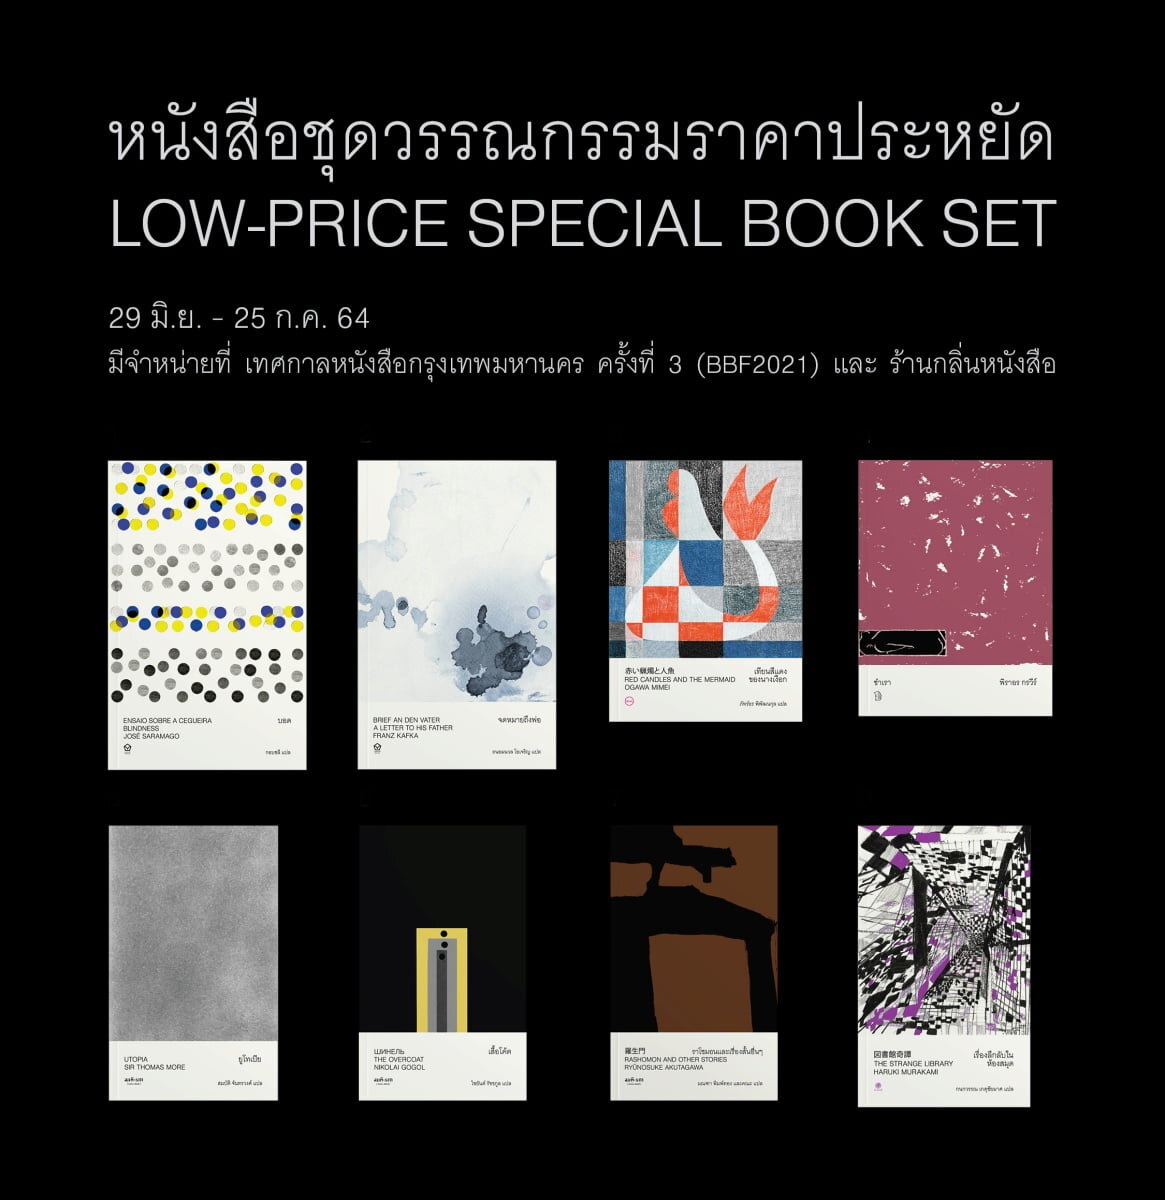 BBF2021_Low-Price Special Book Set cataloq.jpg